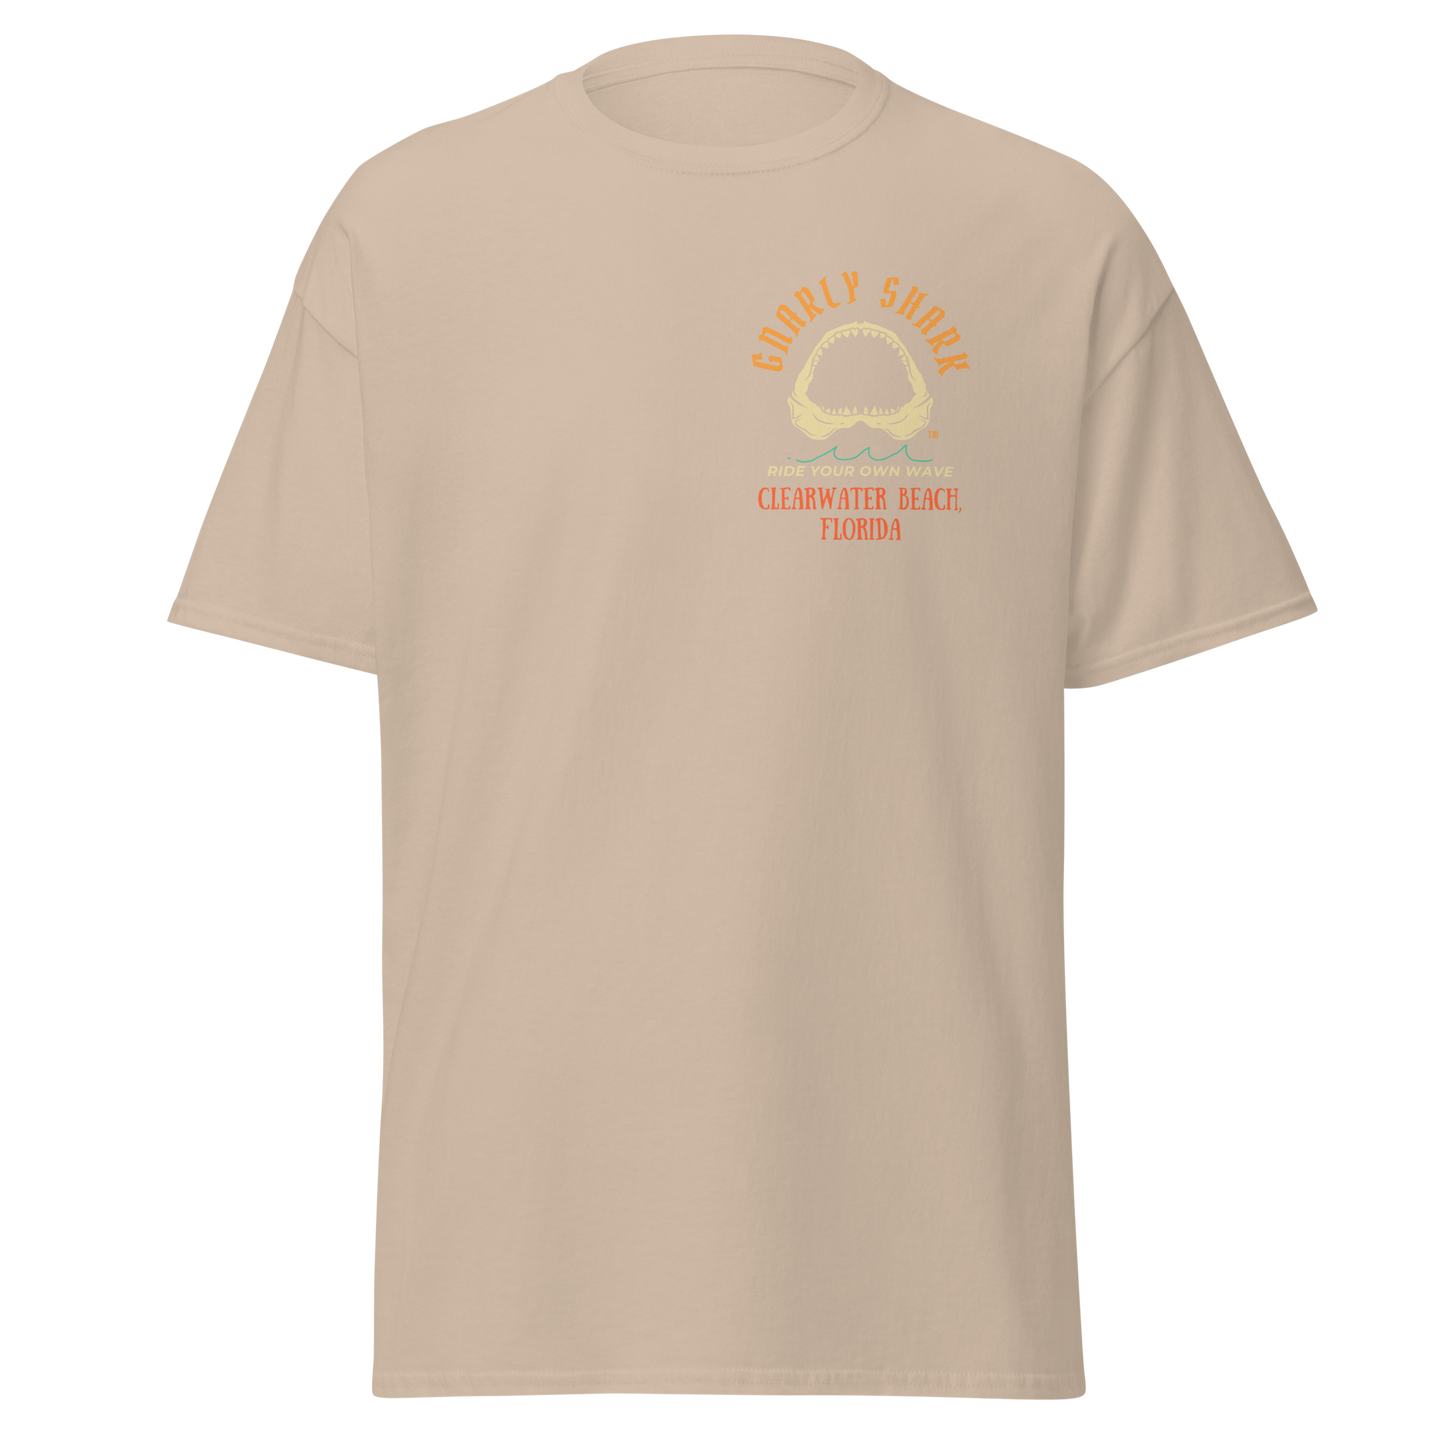 Gnarly Shark Clearwater Beach Florida T-Shirt - Front / Back - Gildan classic 5000